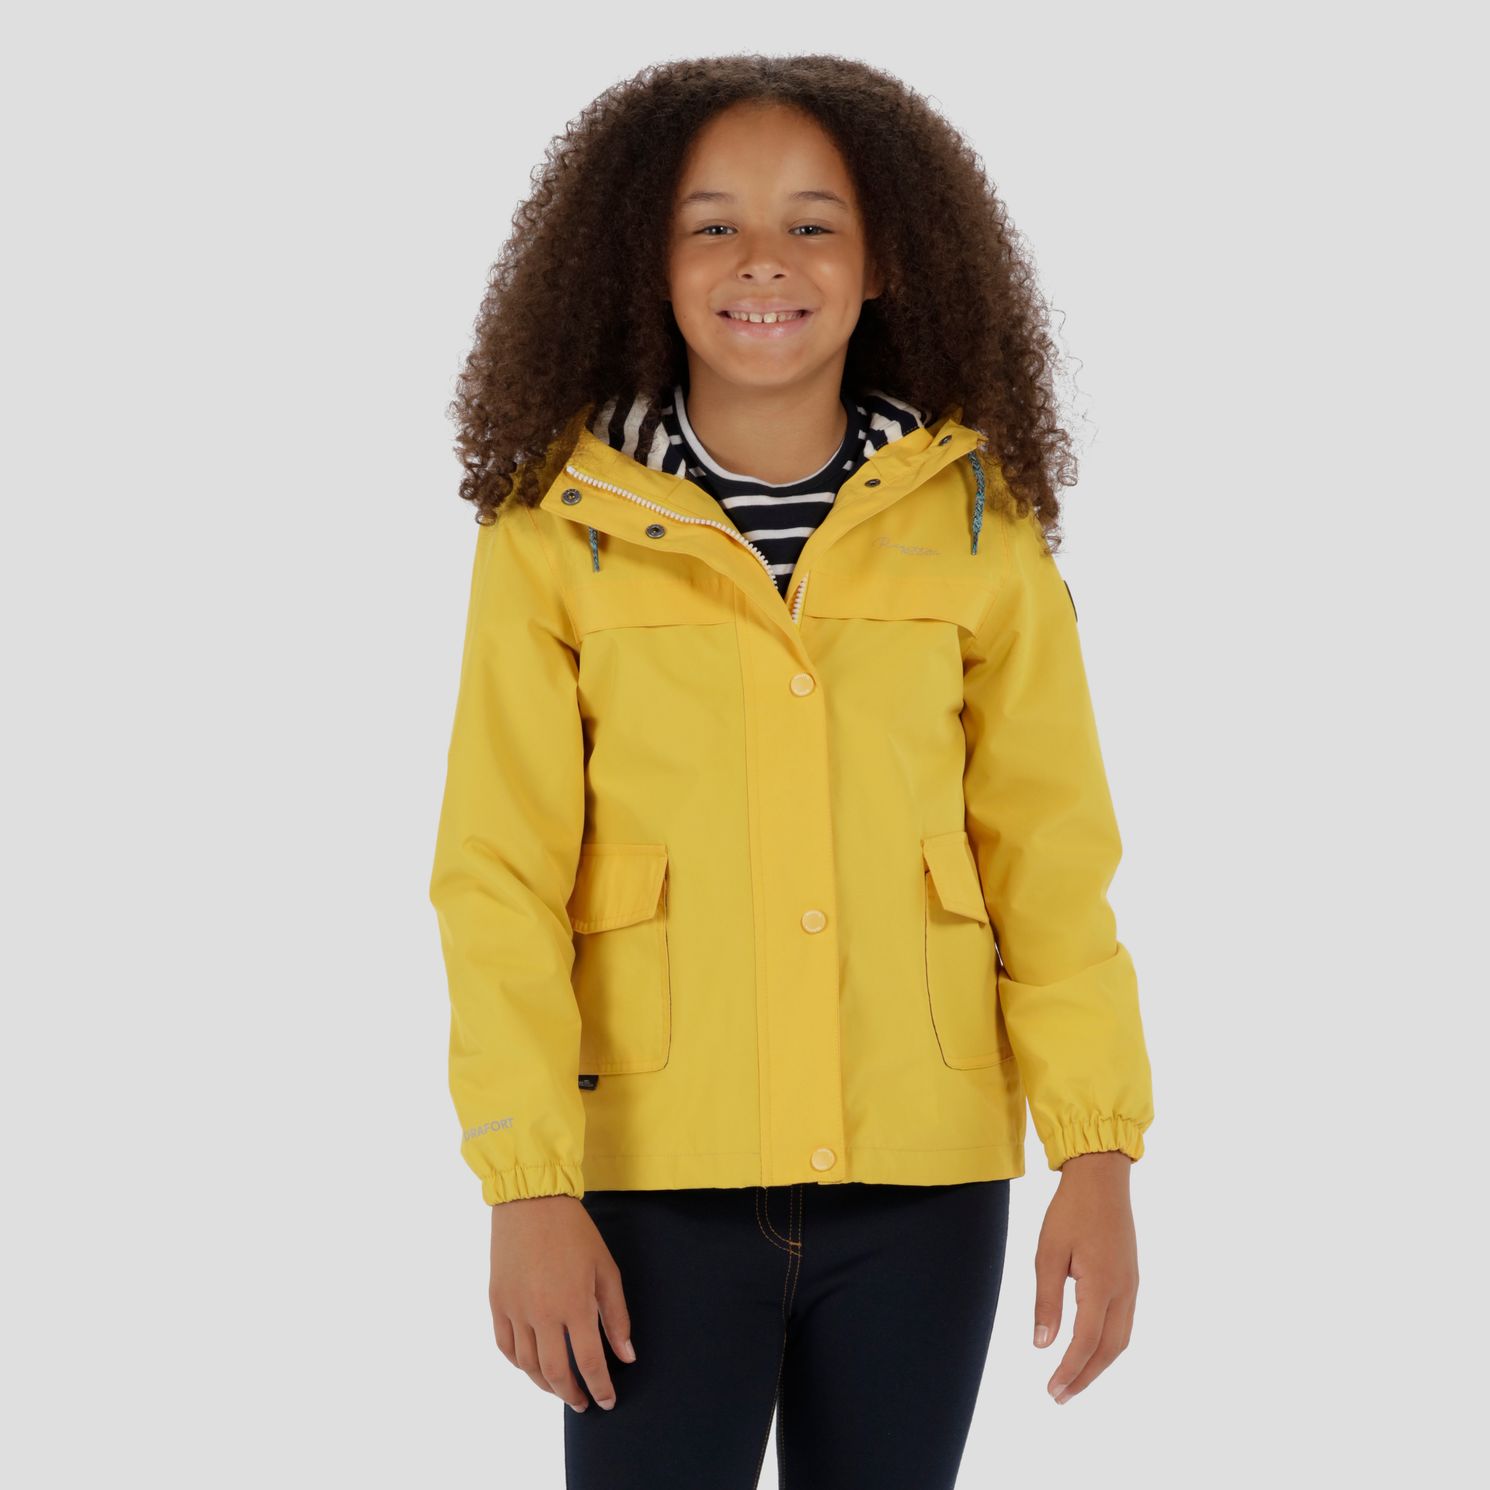 Regatta Kids Betuila Jacket - Lifeguard Yellow - Edinburgh Outdoor Wear